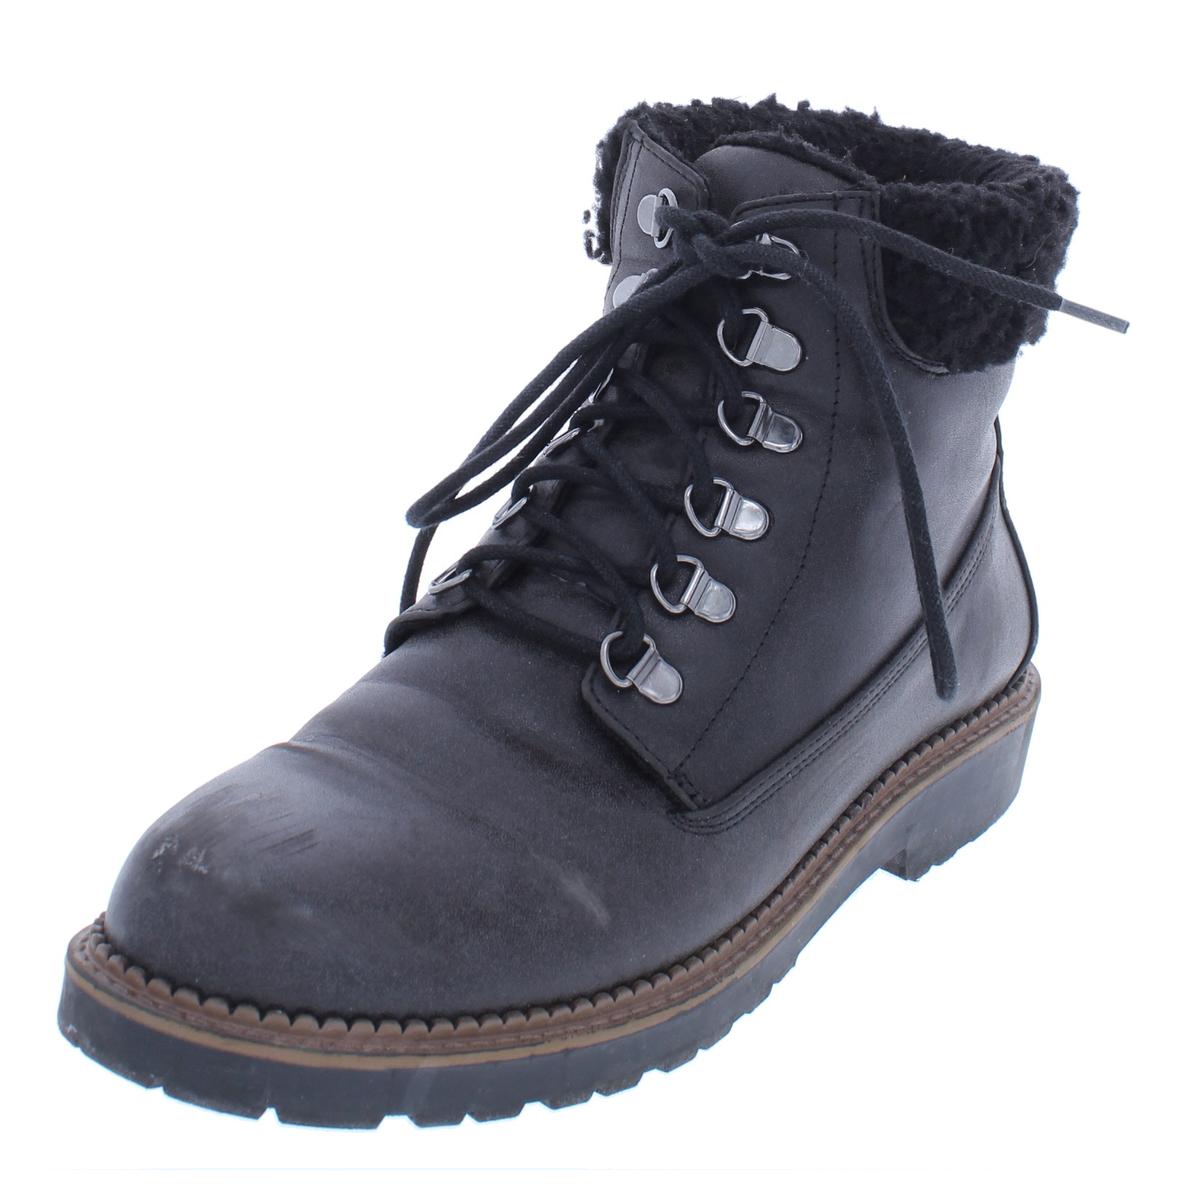 Esprit Womens Candis Black Hiker Ankle Boots Shoes 11 Medium (B,M) BHFO ...